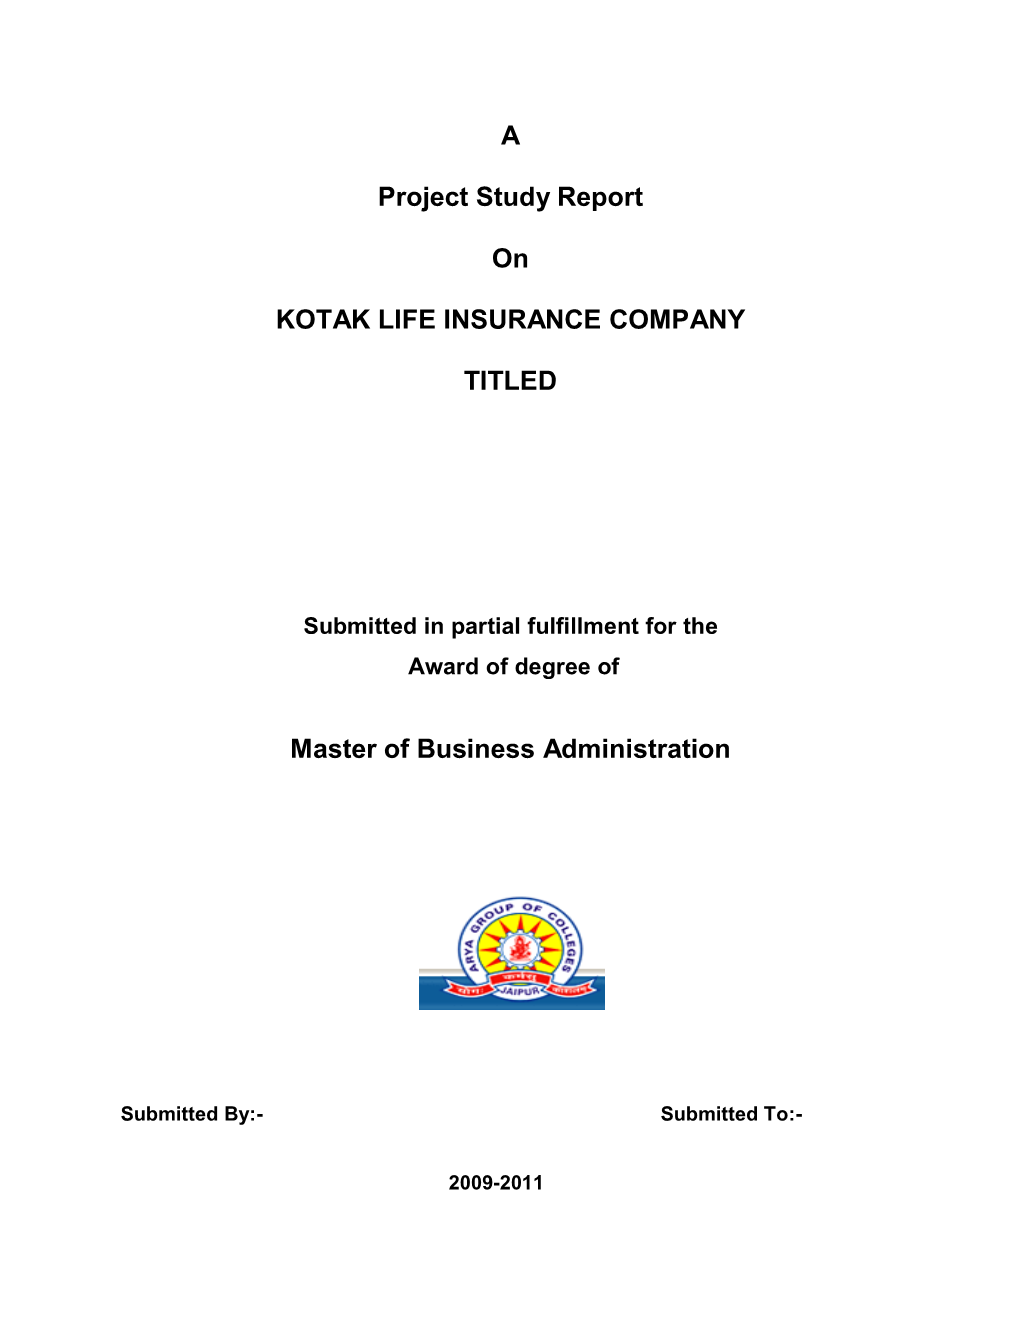 A Project Study Report on KOTAK LIFE INSURANCE COMPANY